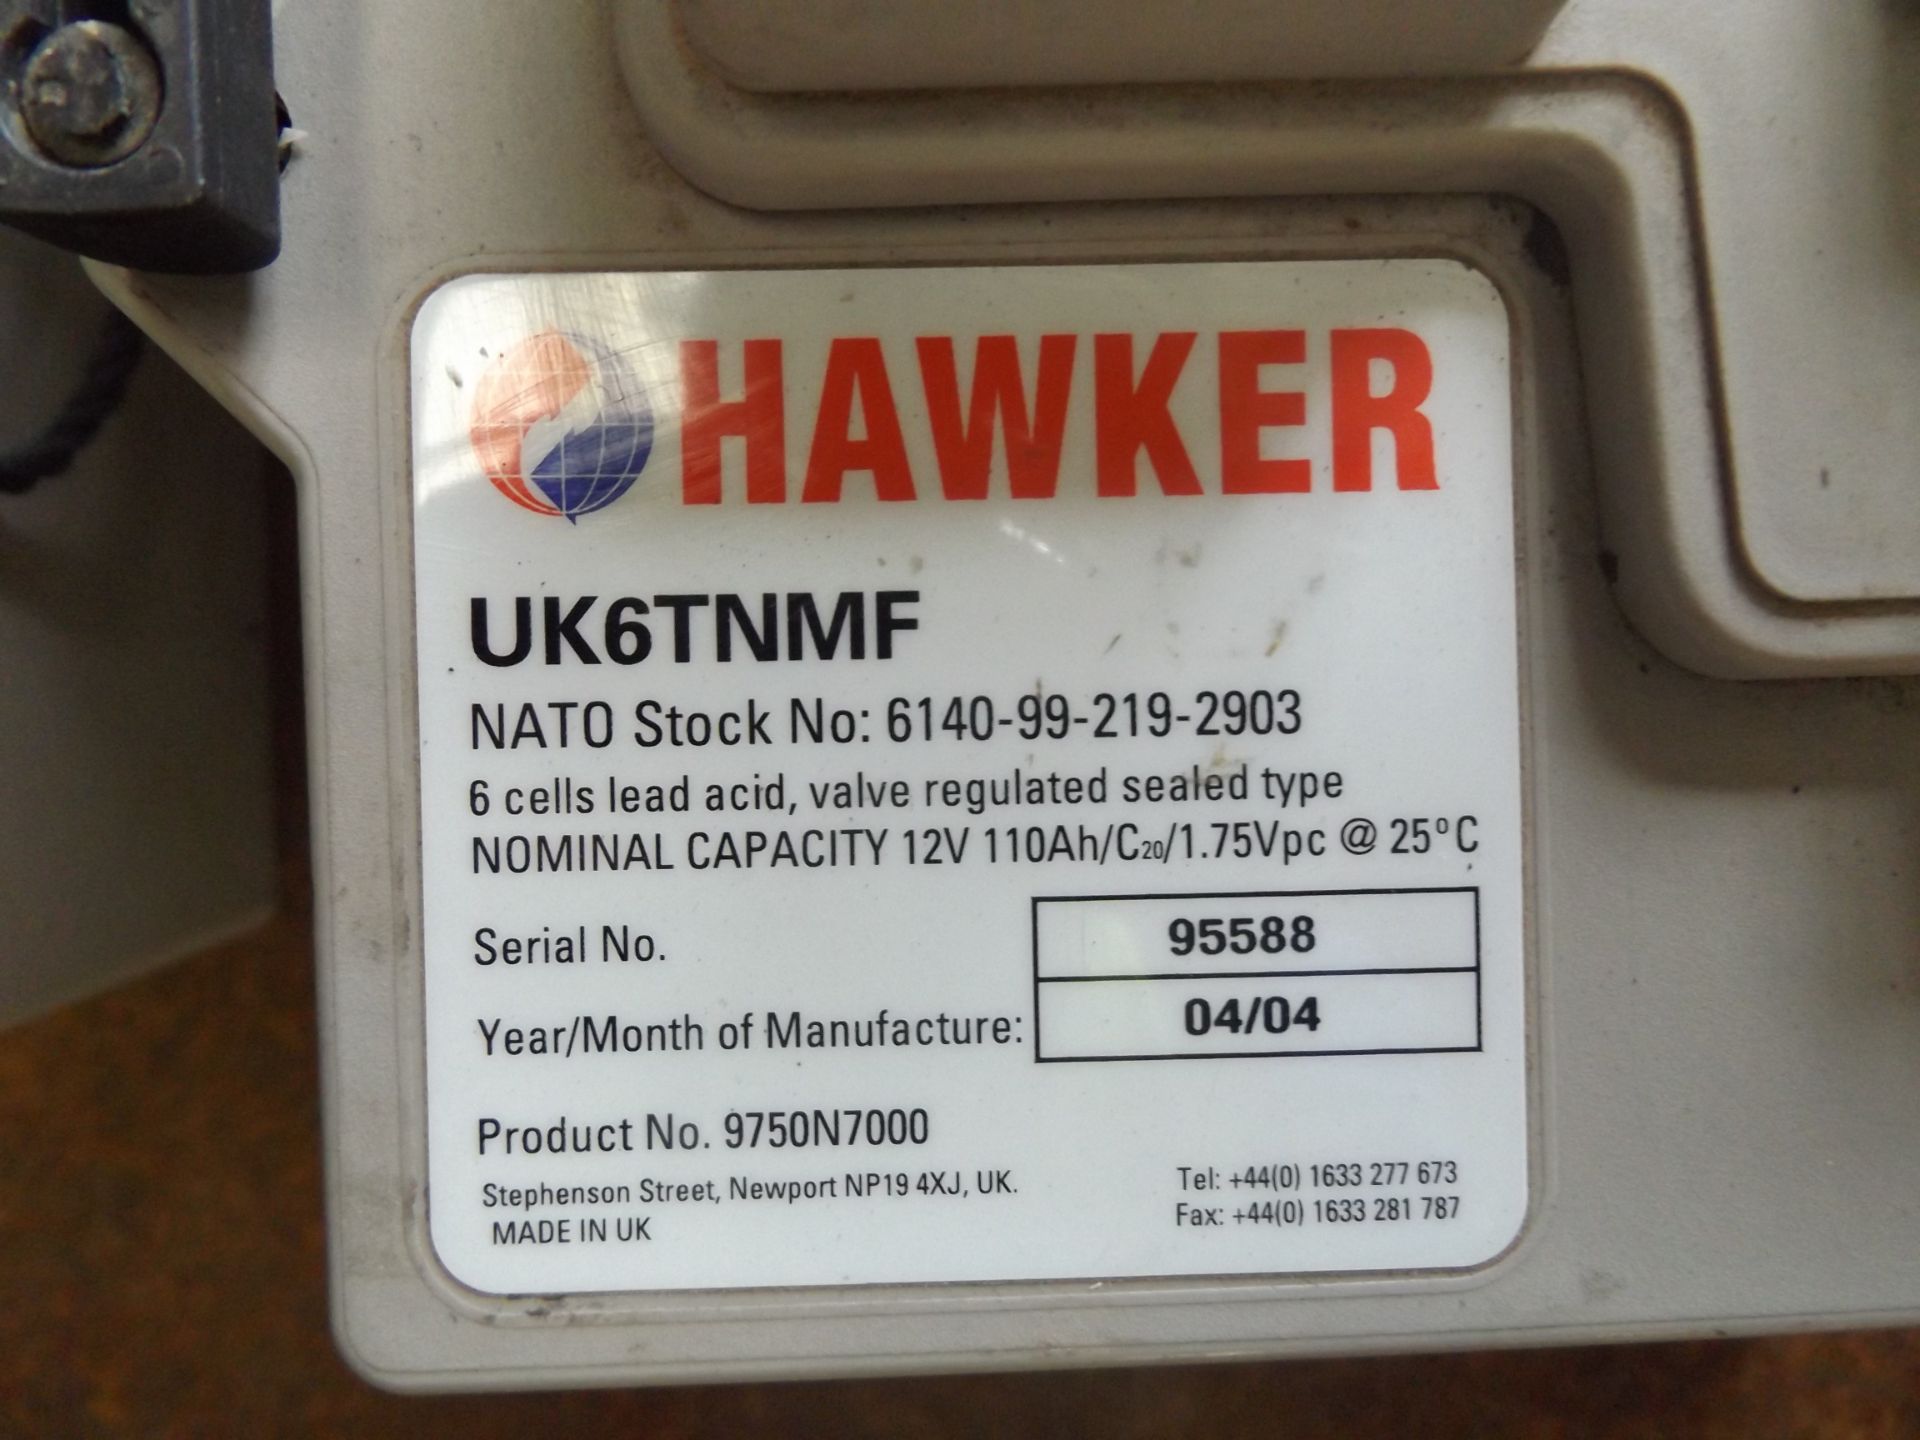 4 x Hawker UK6TNMF Rechargable Batteries - Image 3 of 3